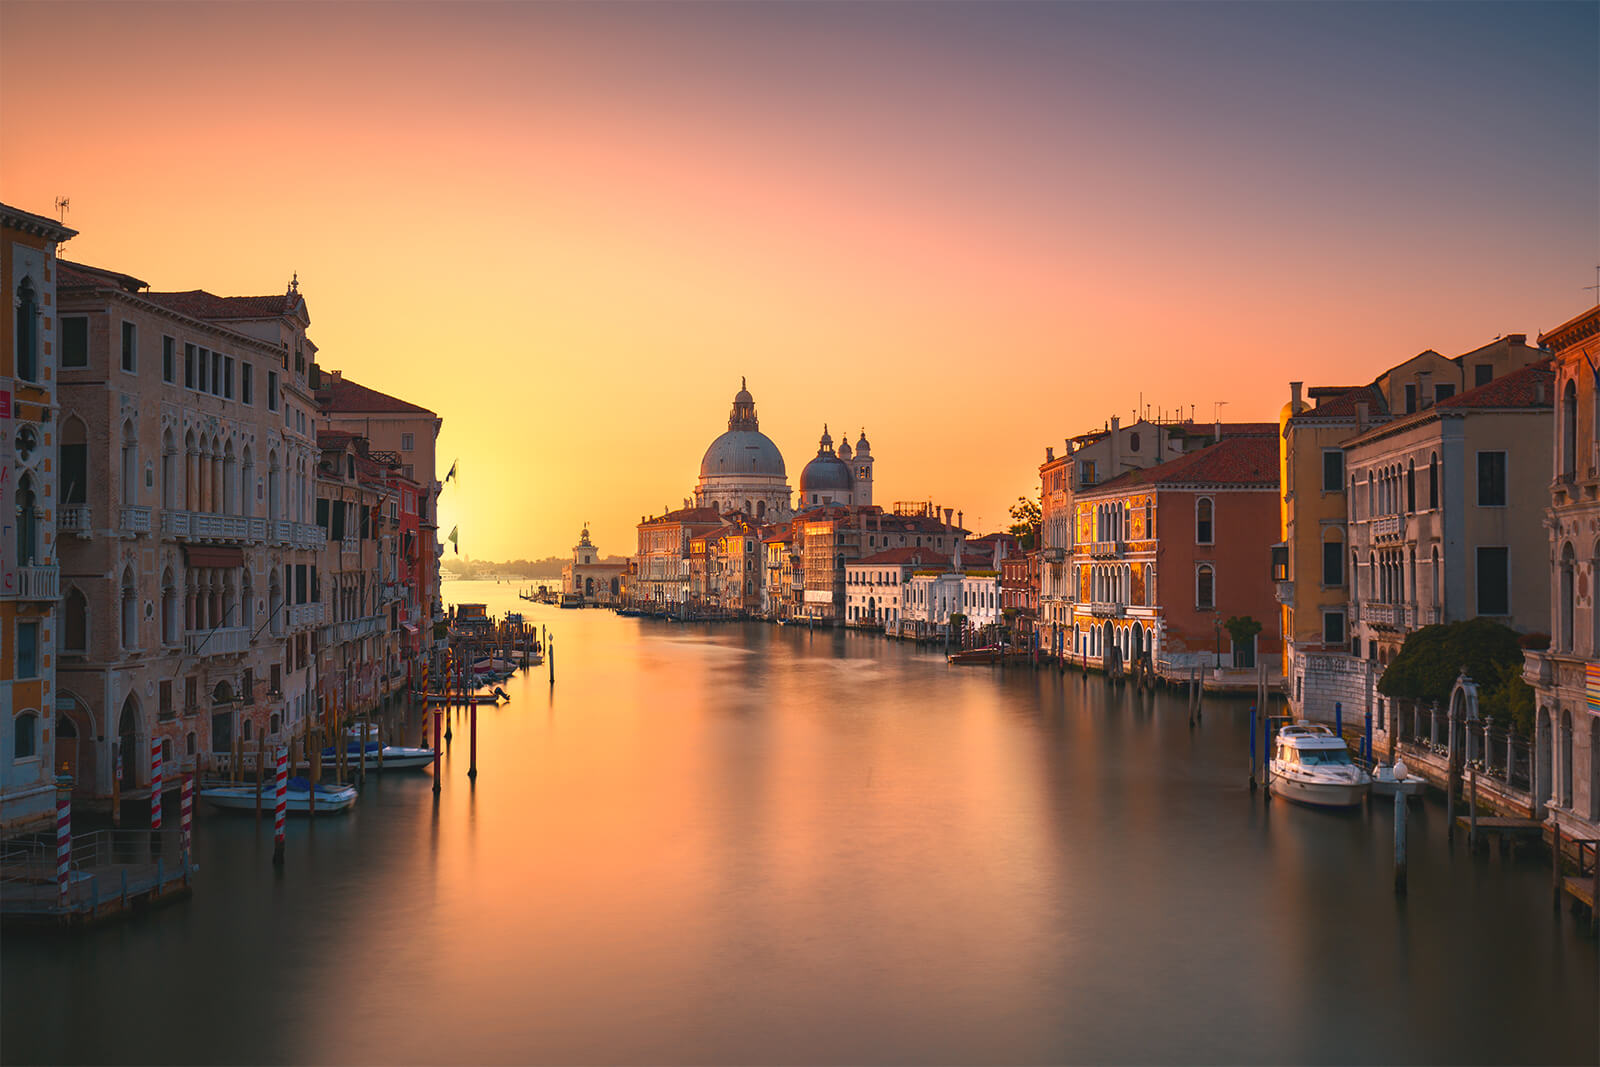 the region of Venice